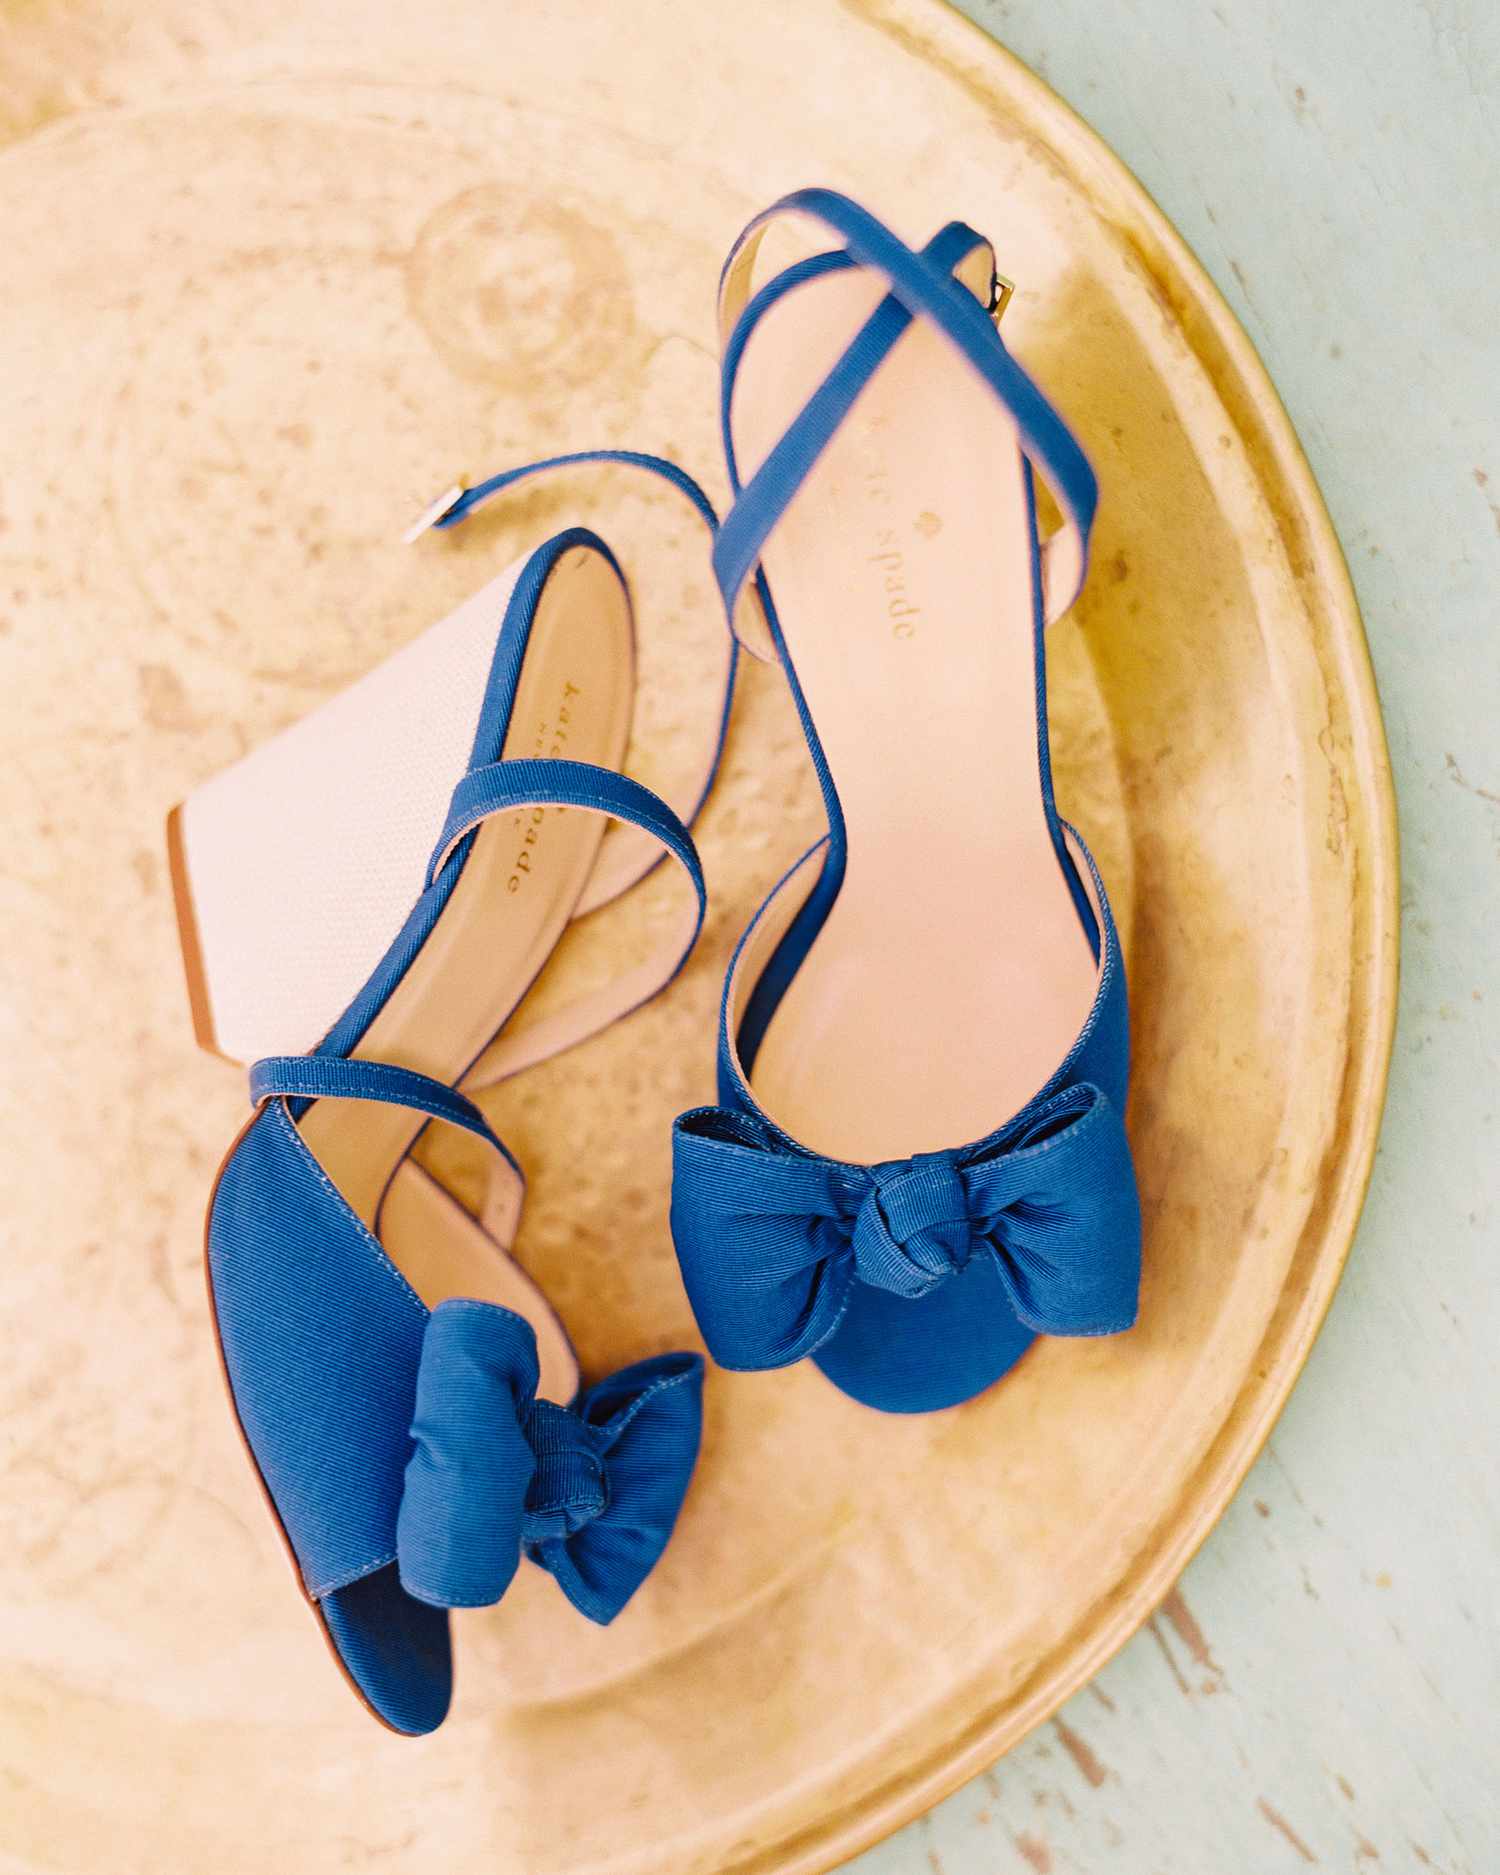 kelly-jeff-wedding-palm-springs-blue-shoes-0175-s112234.jpg